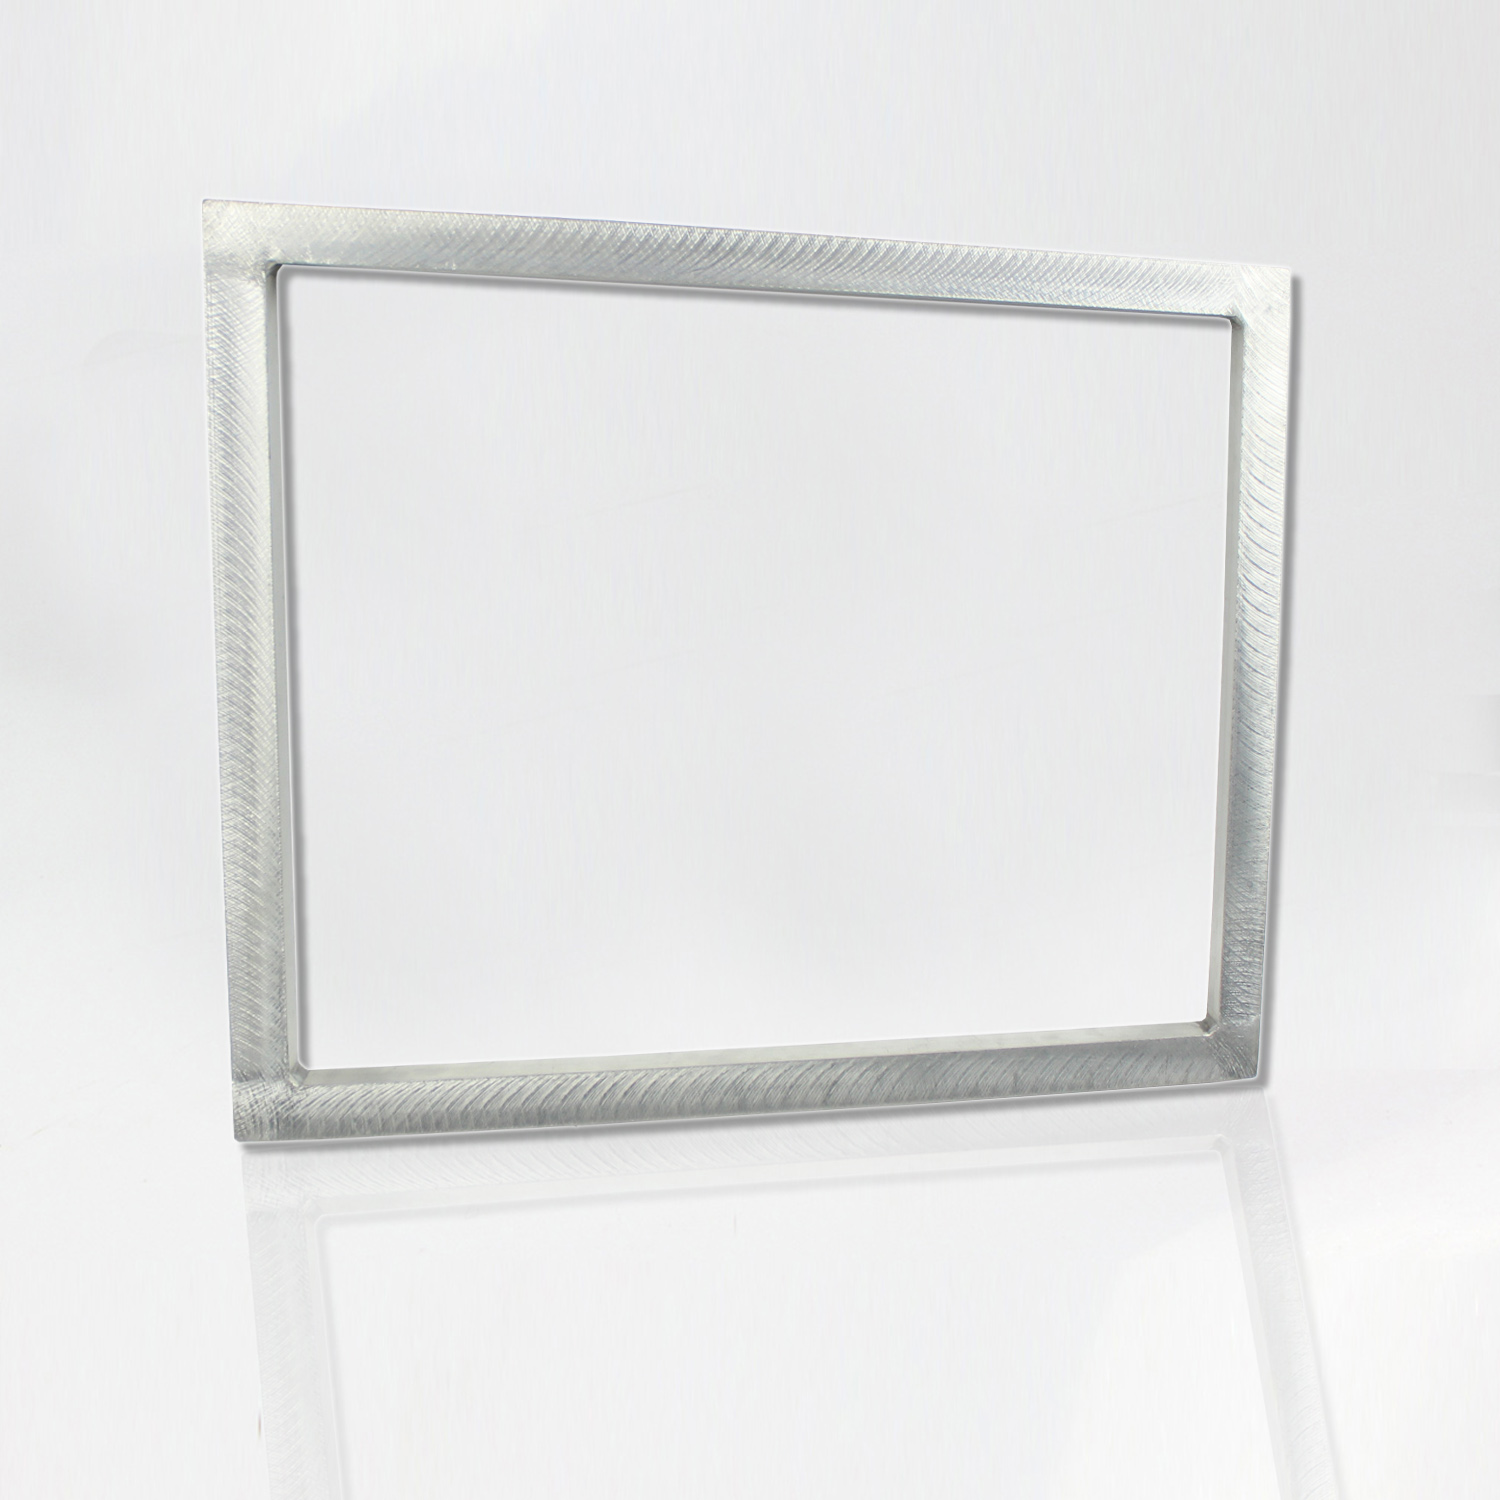 Aluminum Silk Screen Frame